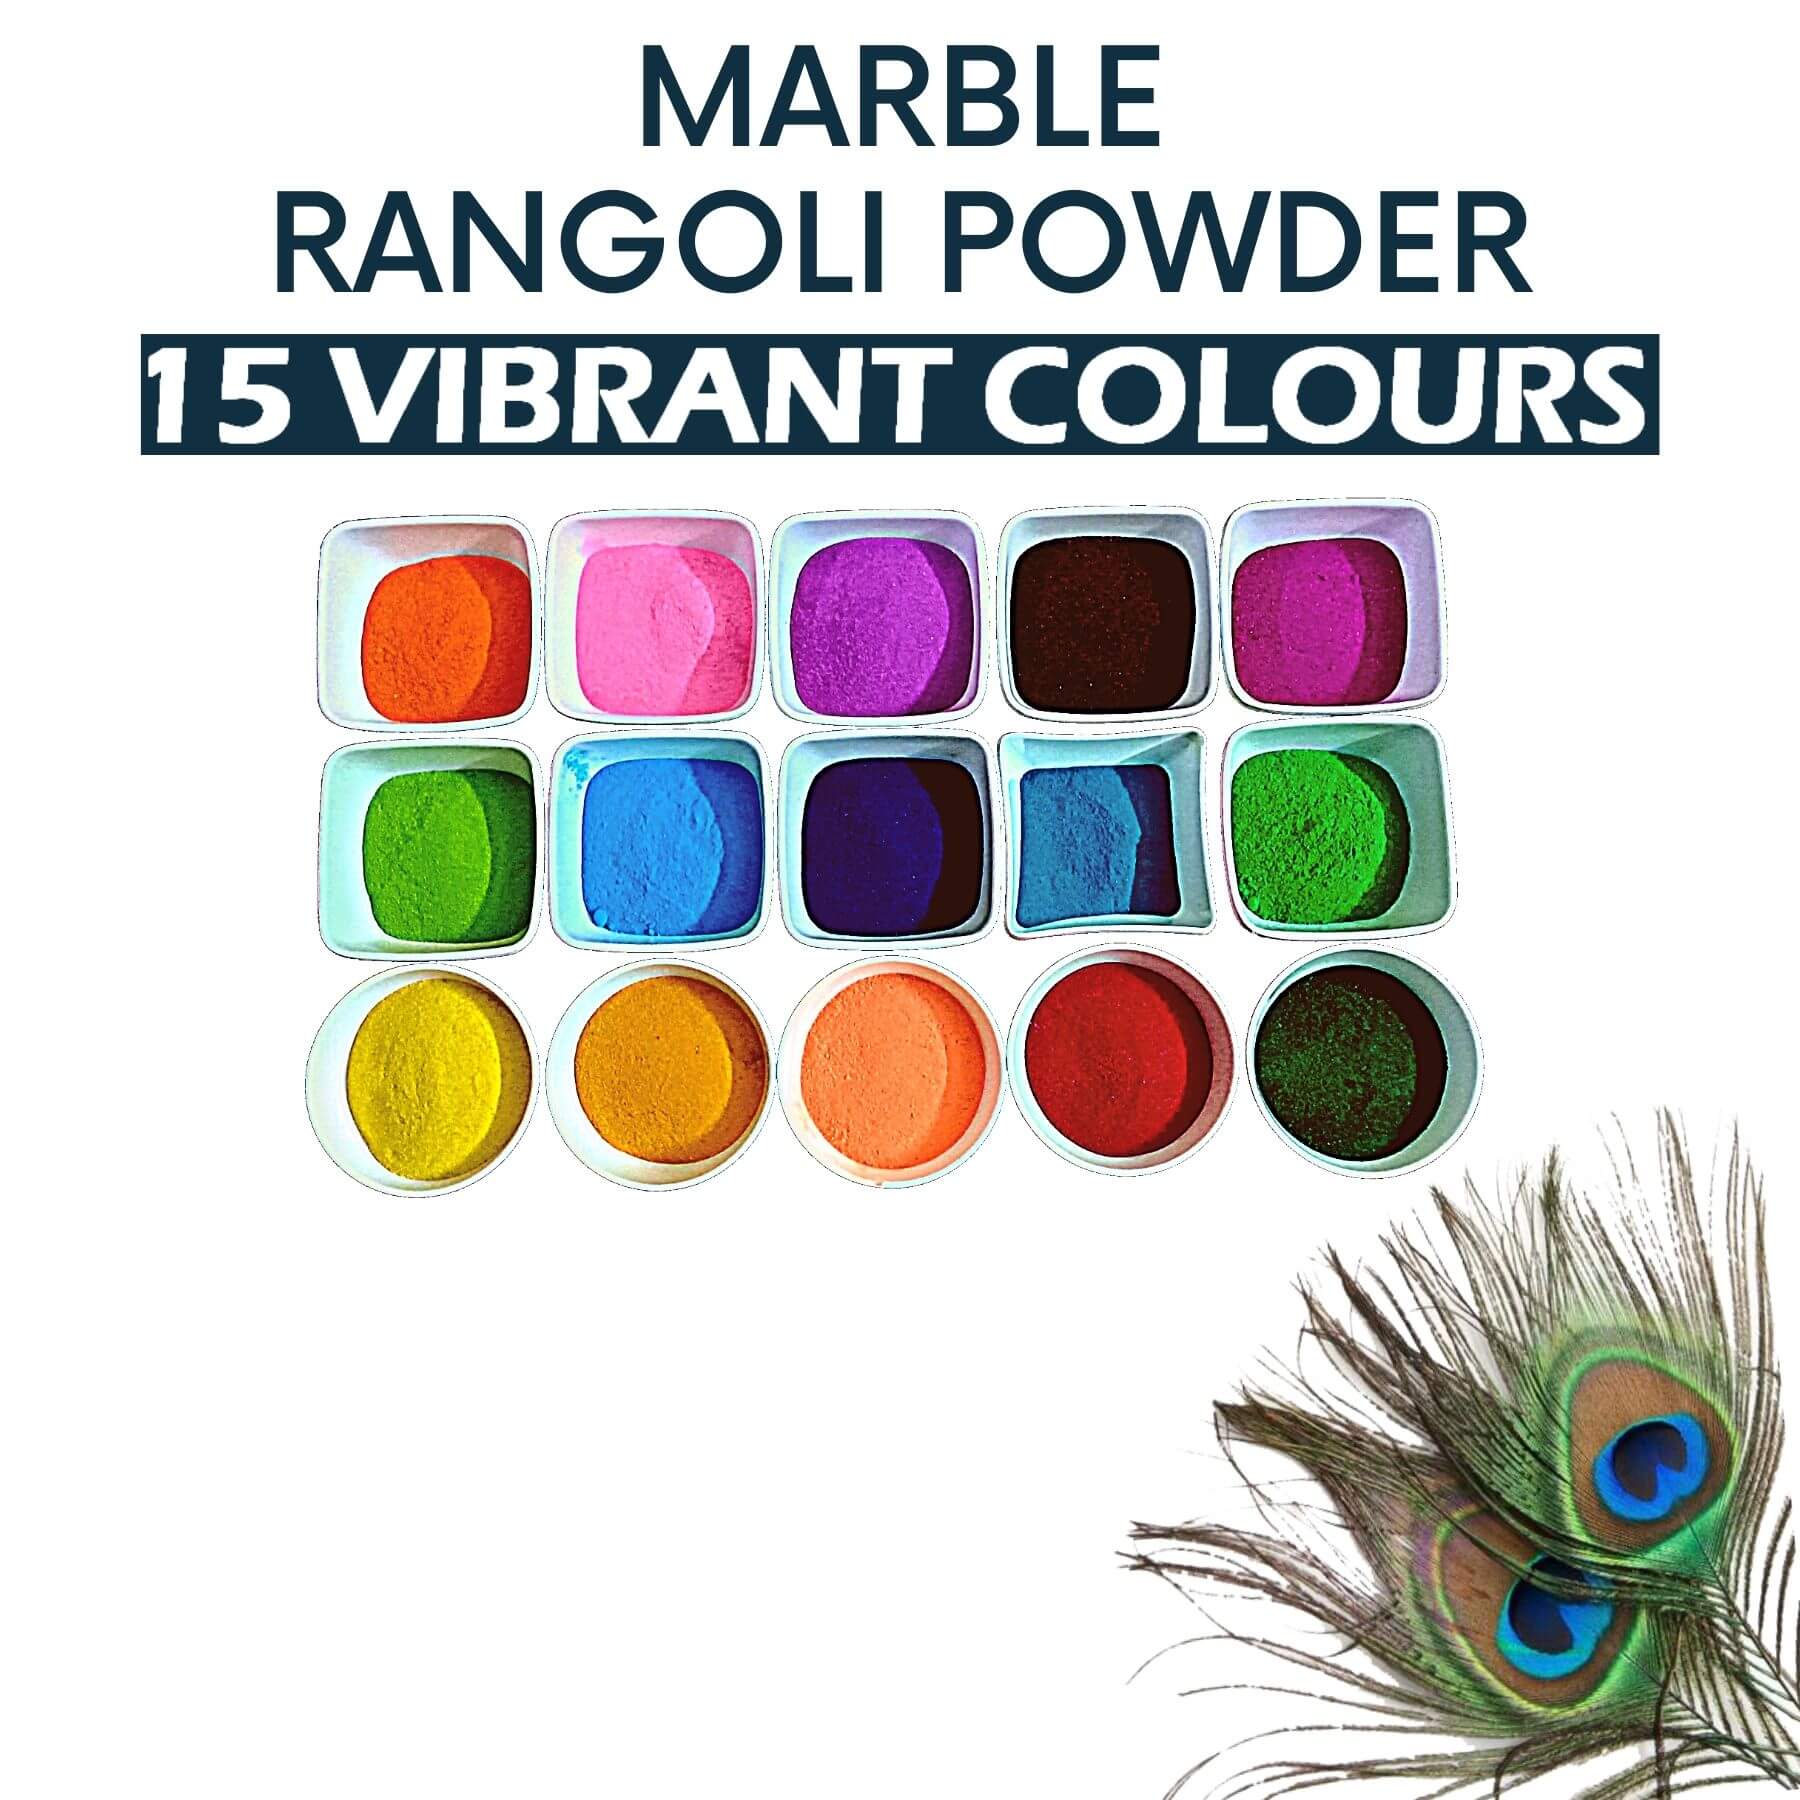 Marble Rangoli Powder - 15 Vibrant Colours(Each 200g) - 3Kg Pack + Shipping  Free - Aalayam Selveer